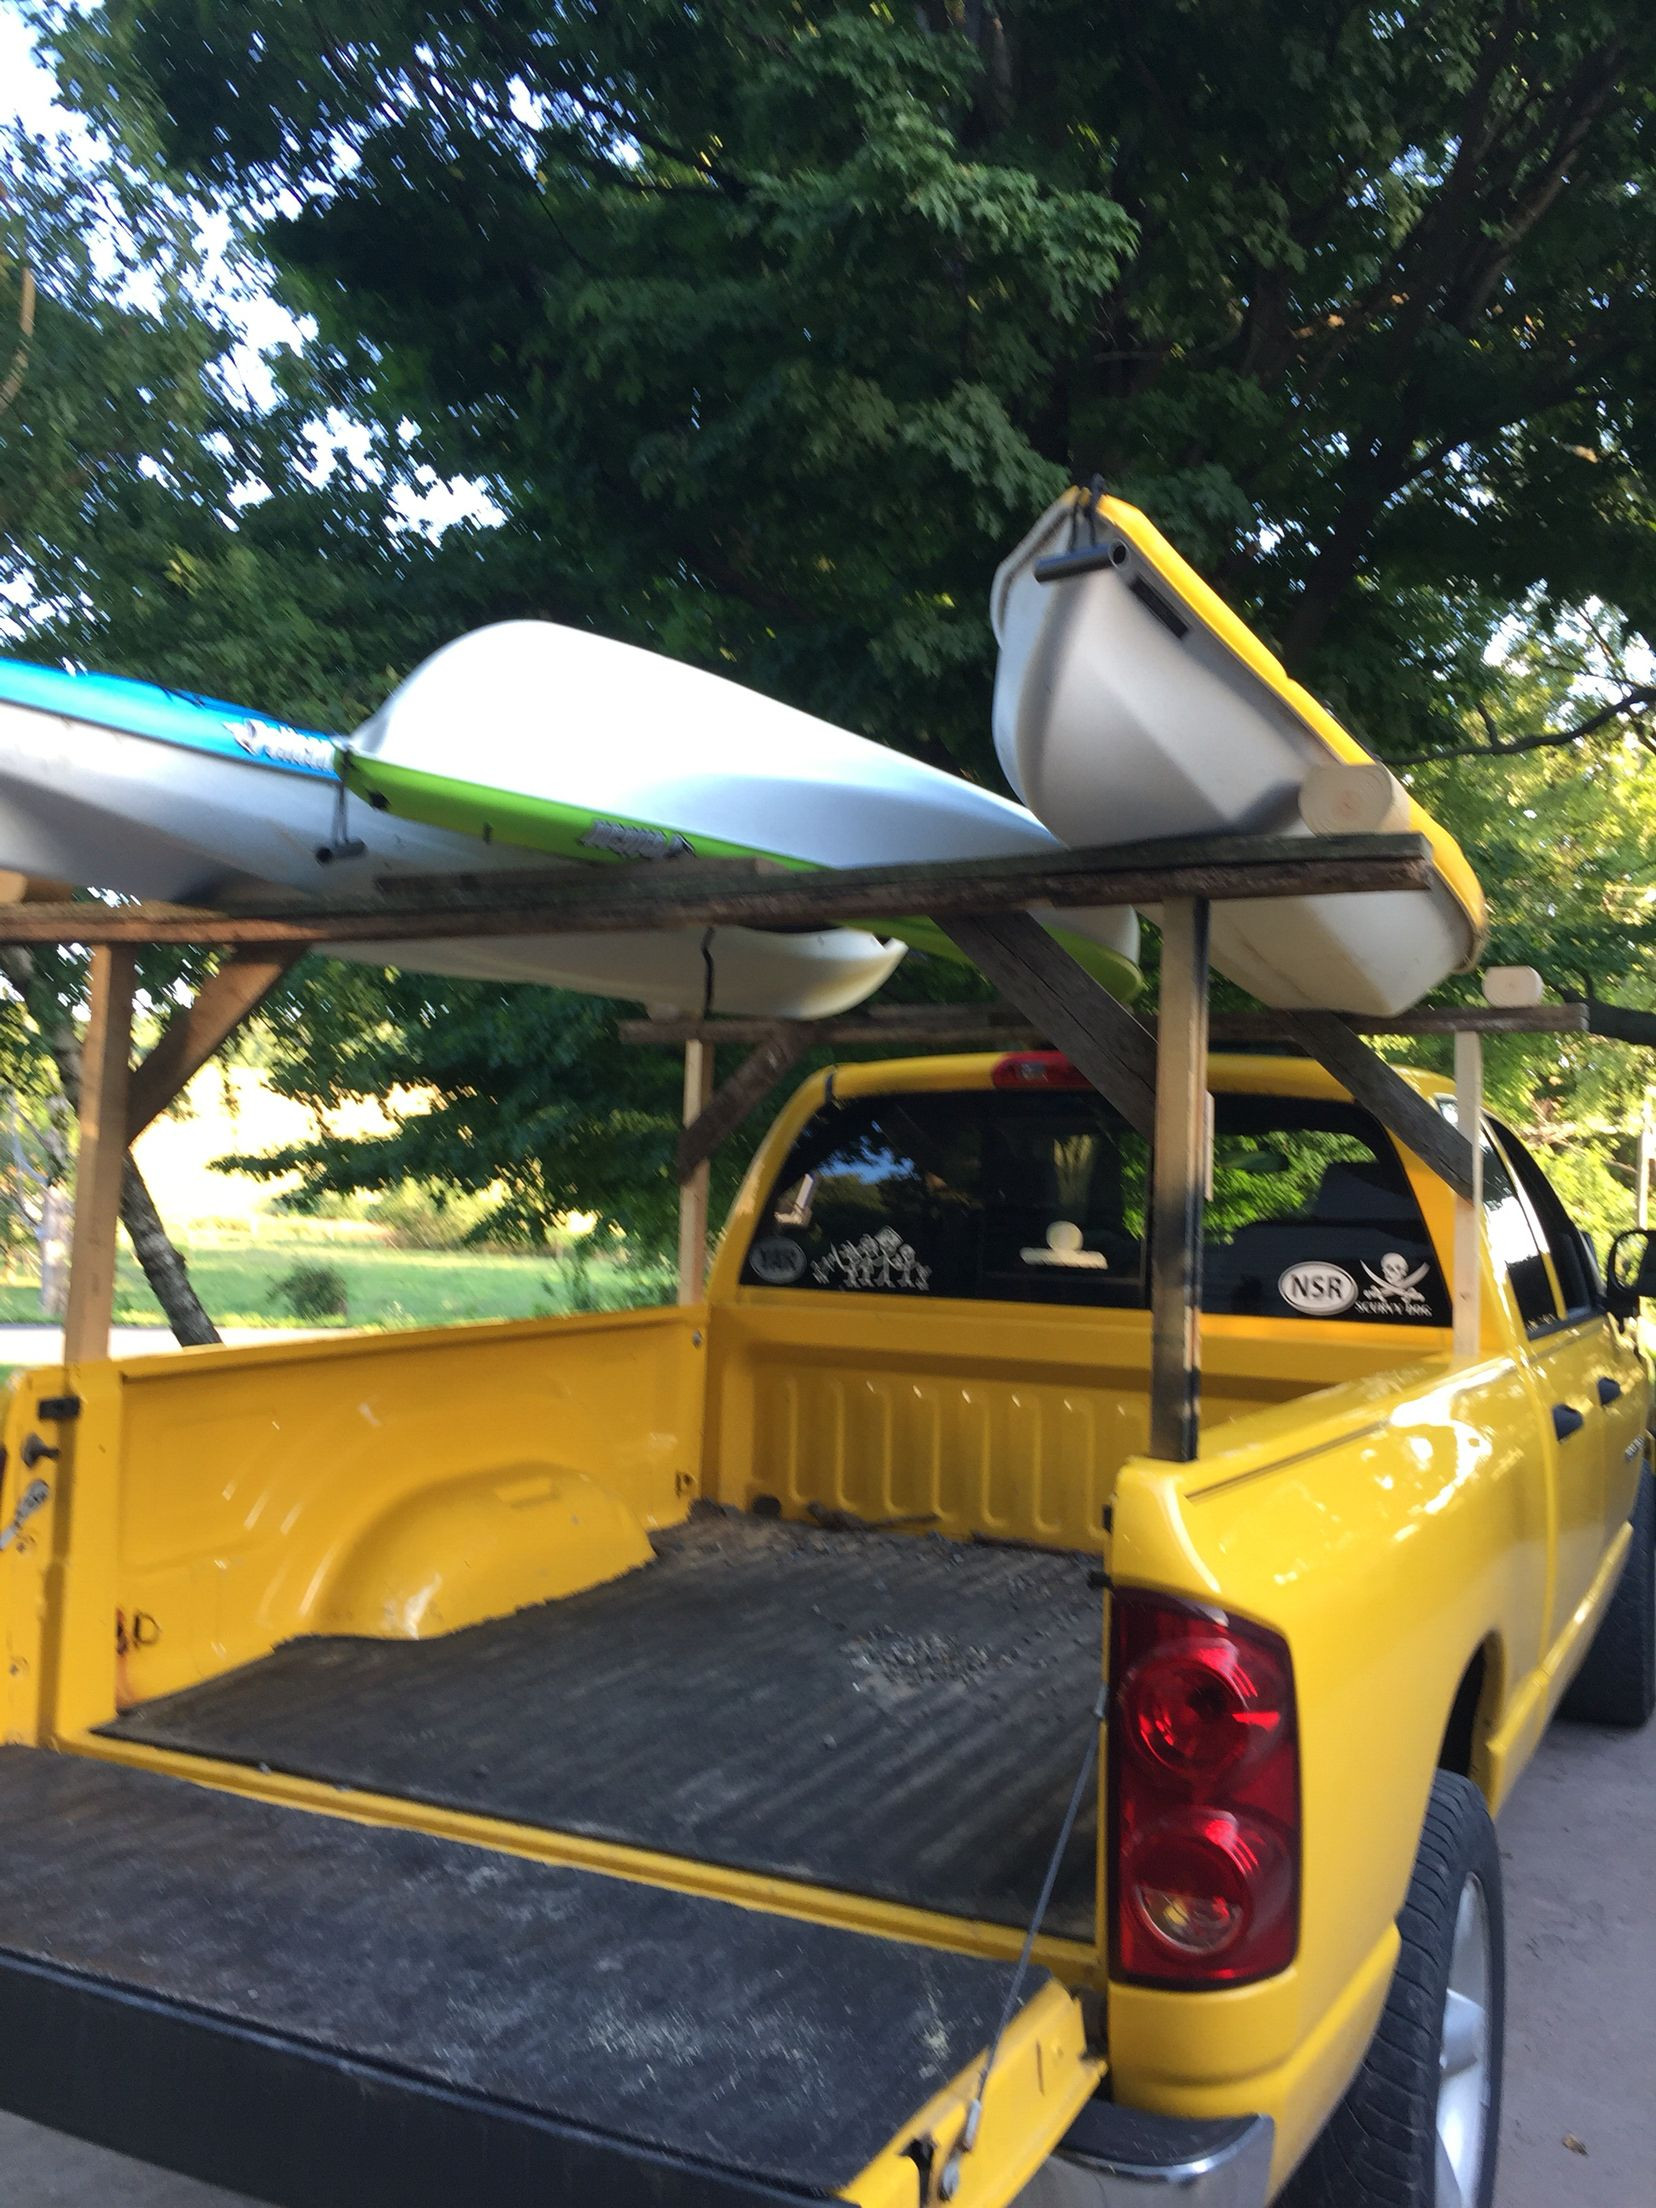 DIY Kayak Rack For Truck Bed
 Diy kayak rack on the cheap Spent $1 84 on hardware so